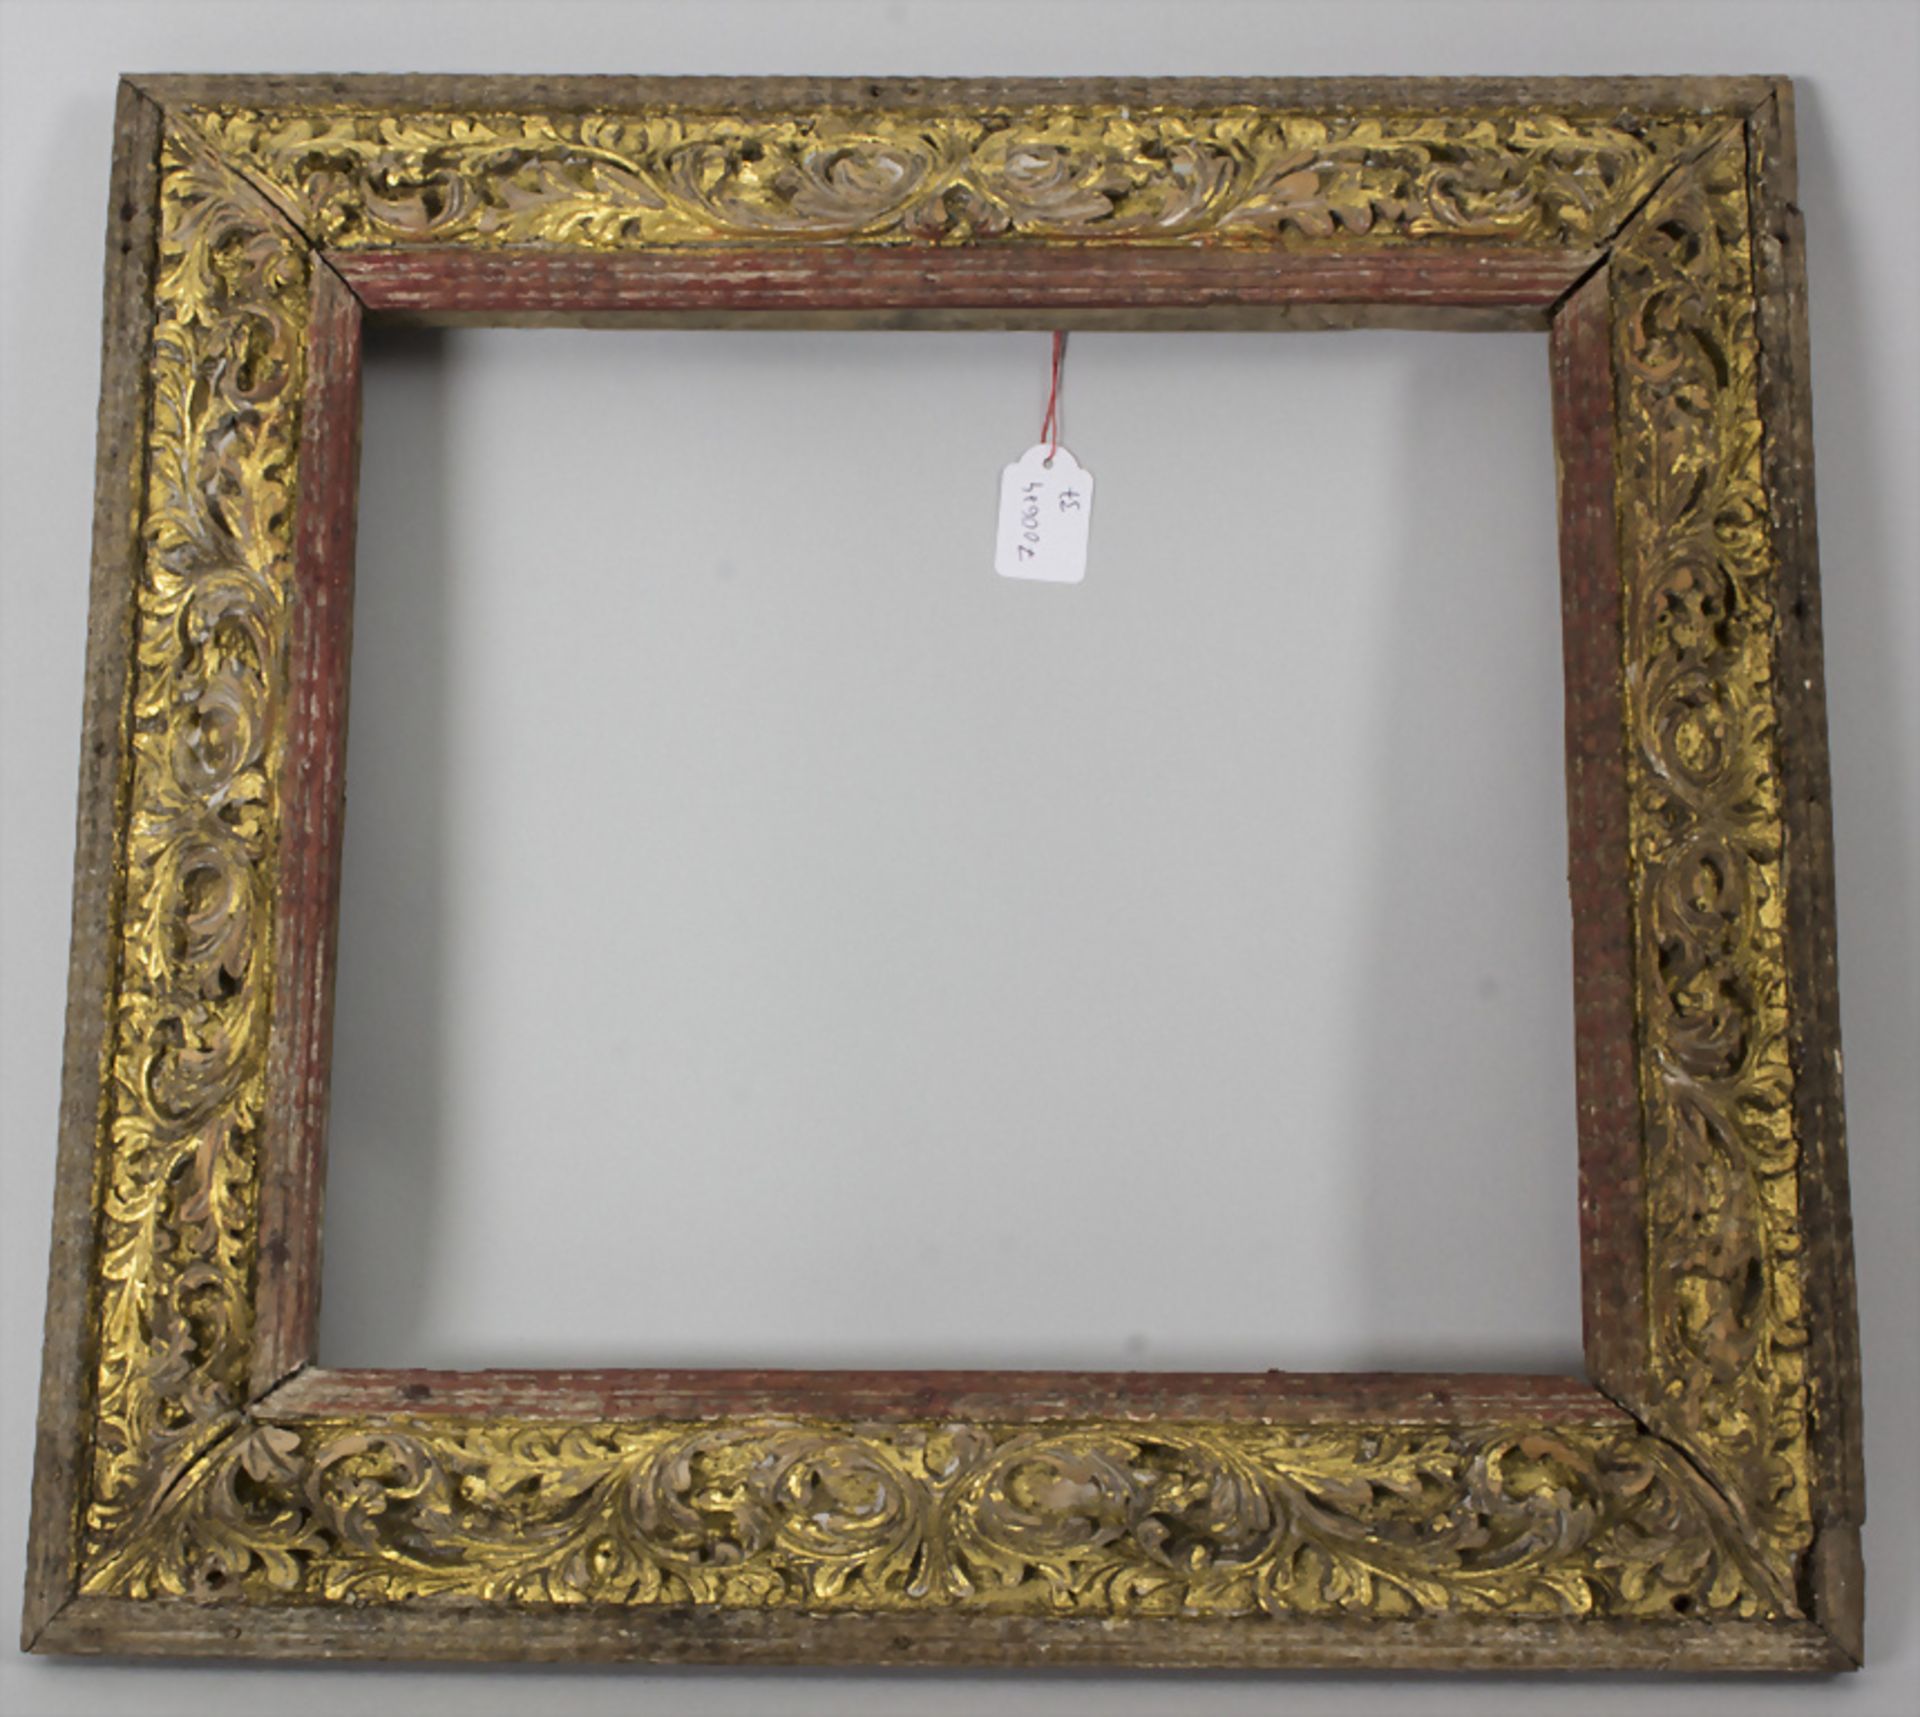 Barockrahmen / A Baroque frame, wohl 17. Jh.